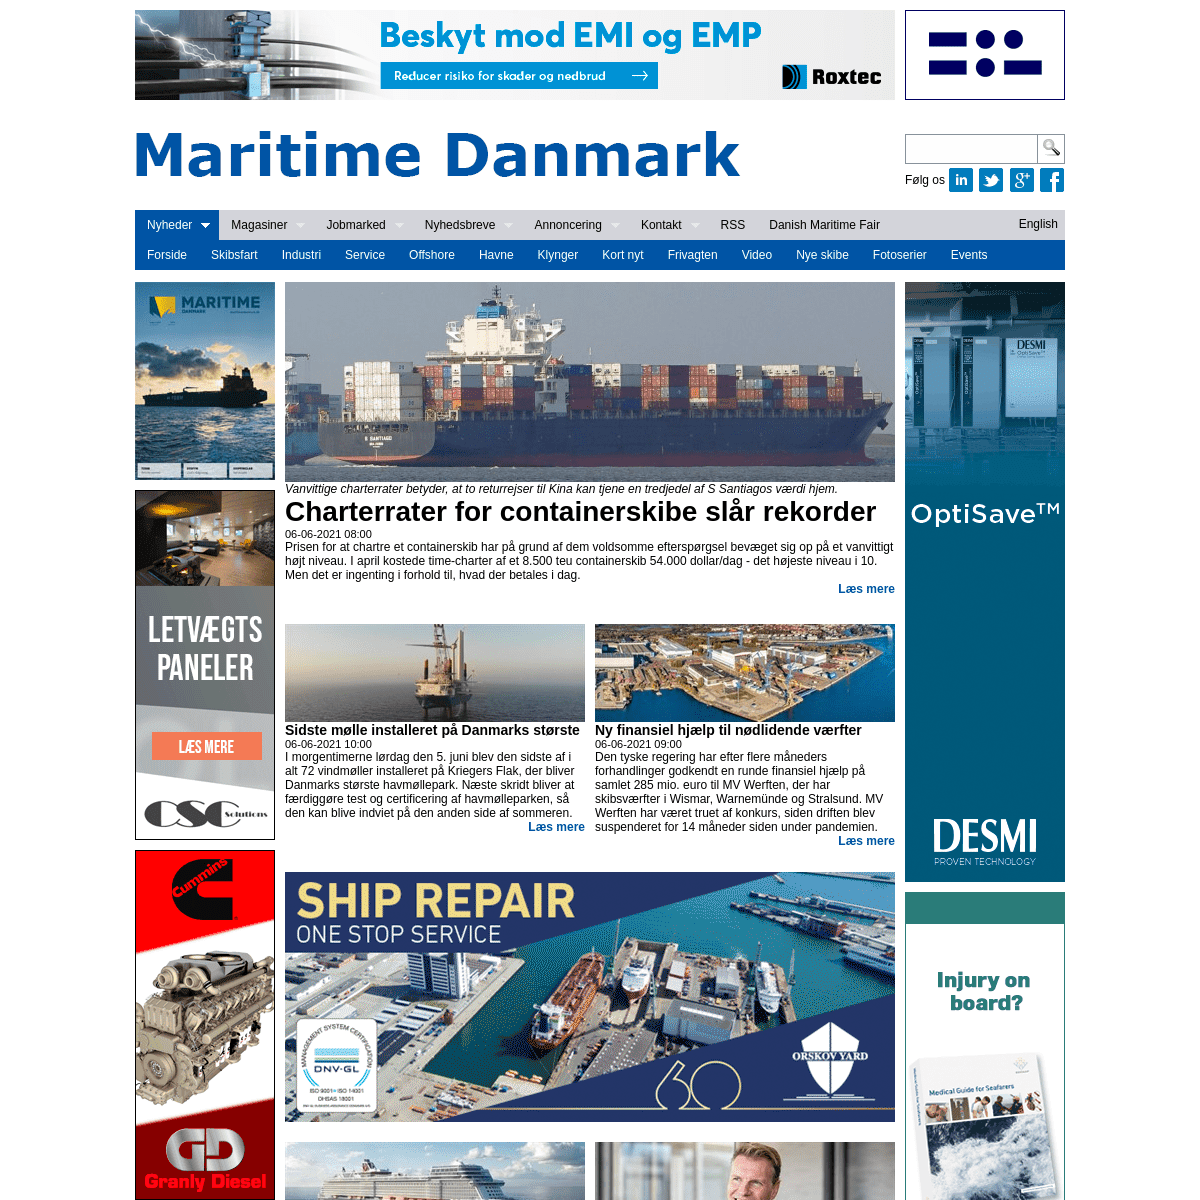 A complete backup of https://maritimedanmark.dk